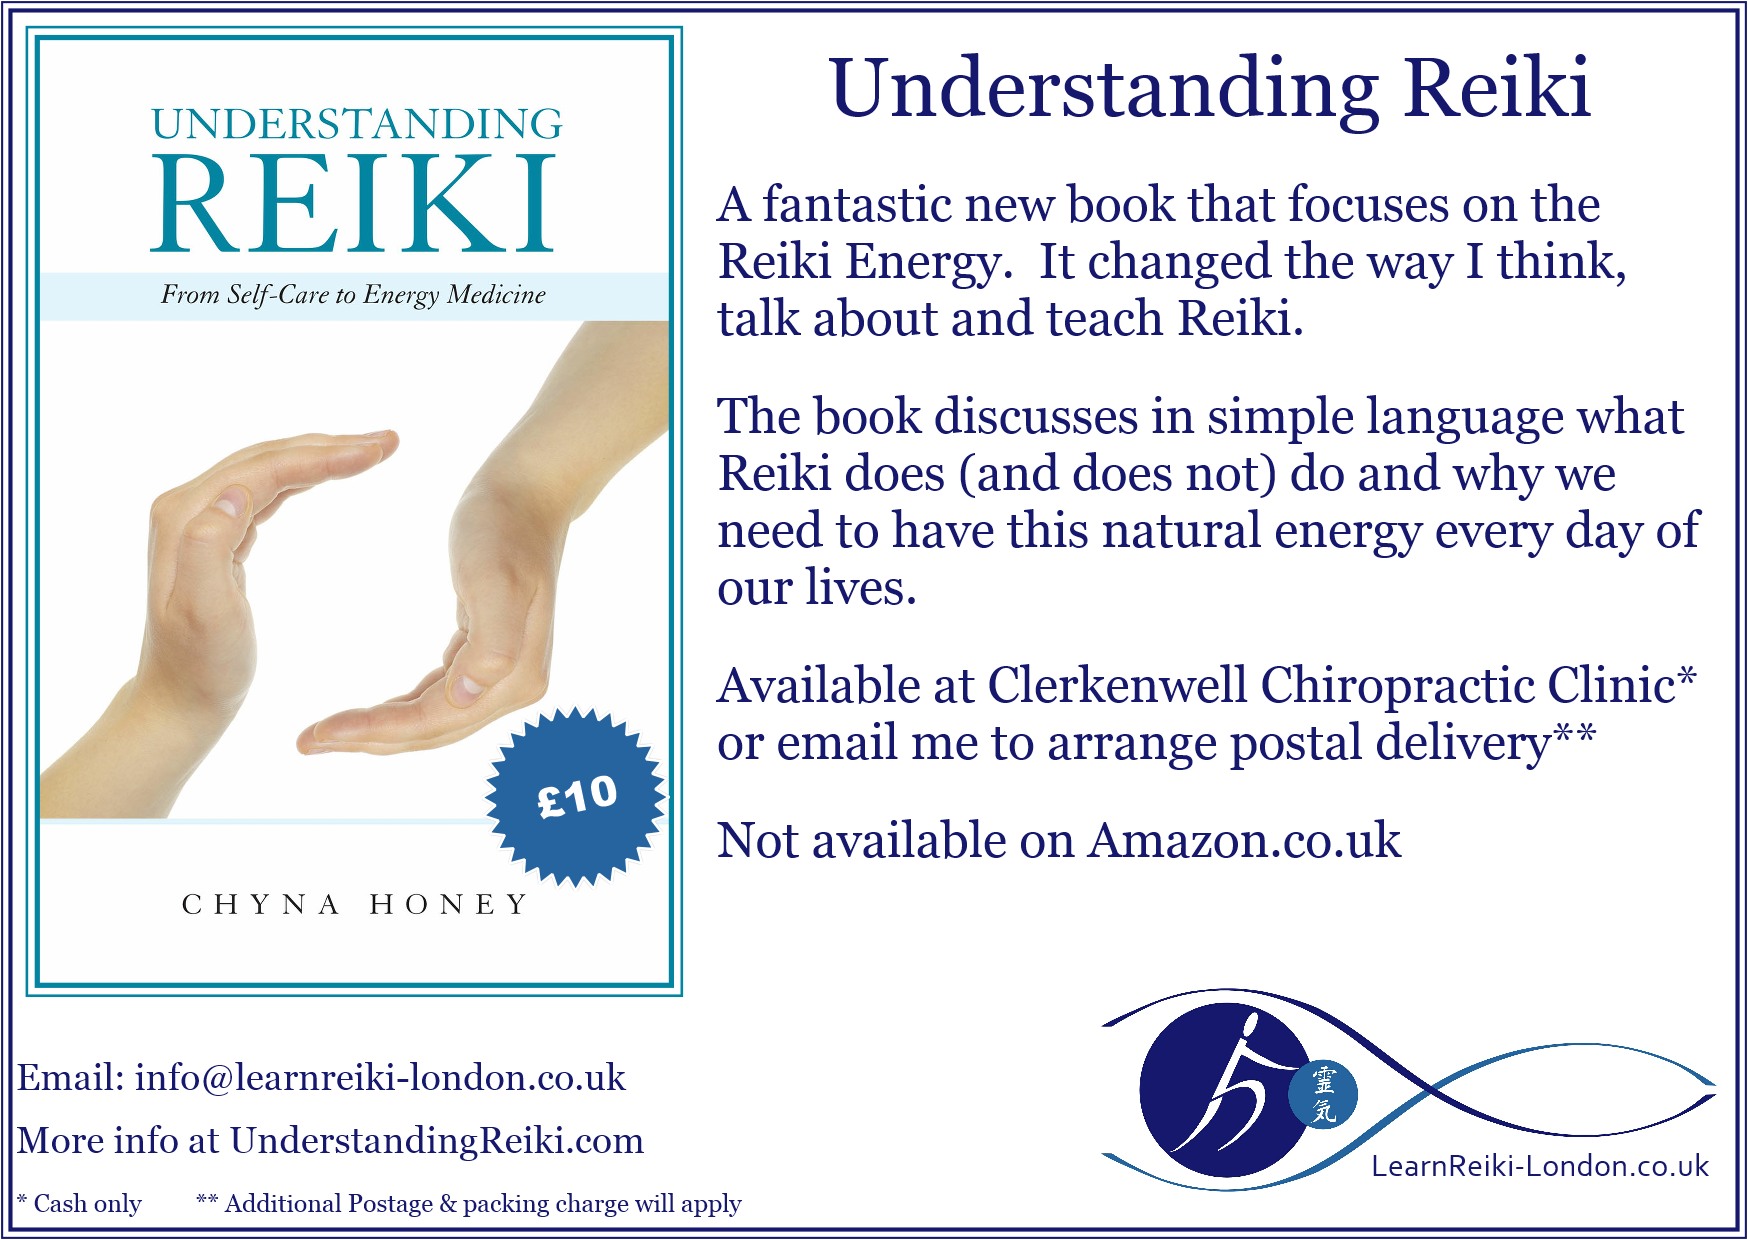 Understanding Reiki book sales